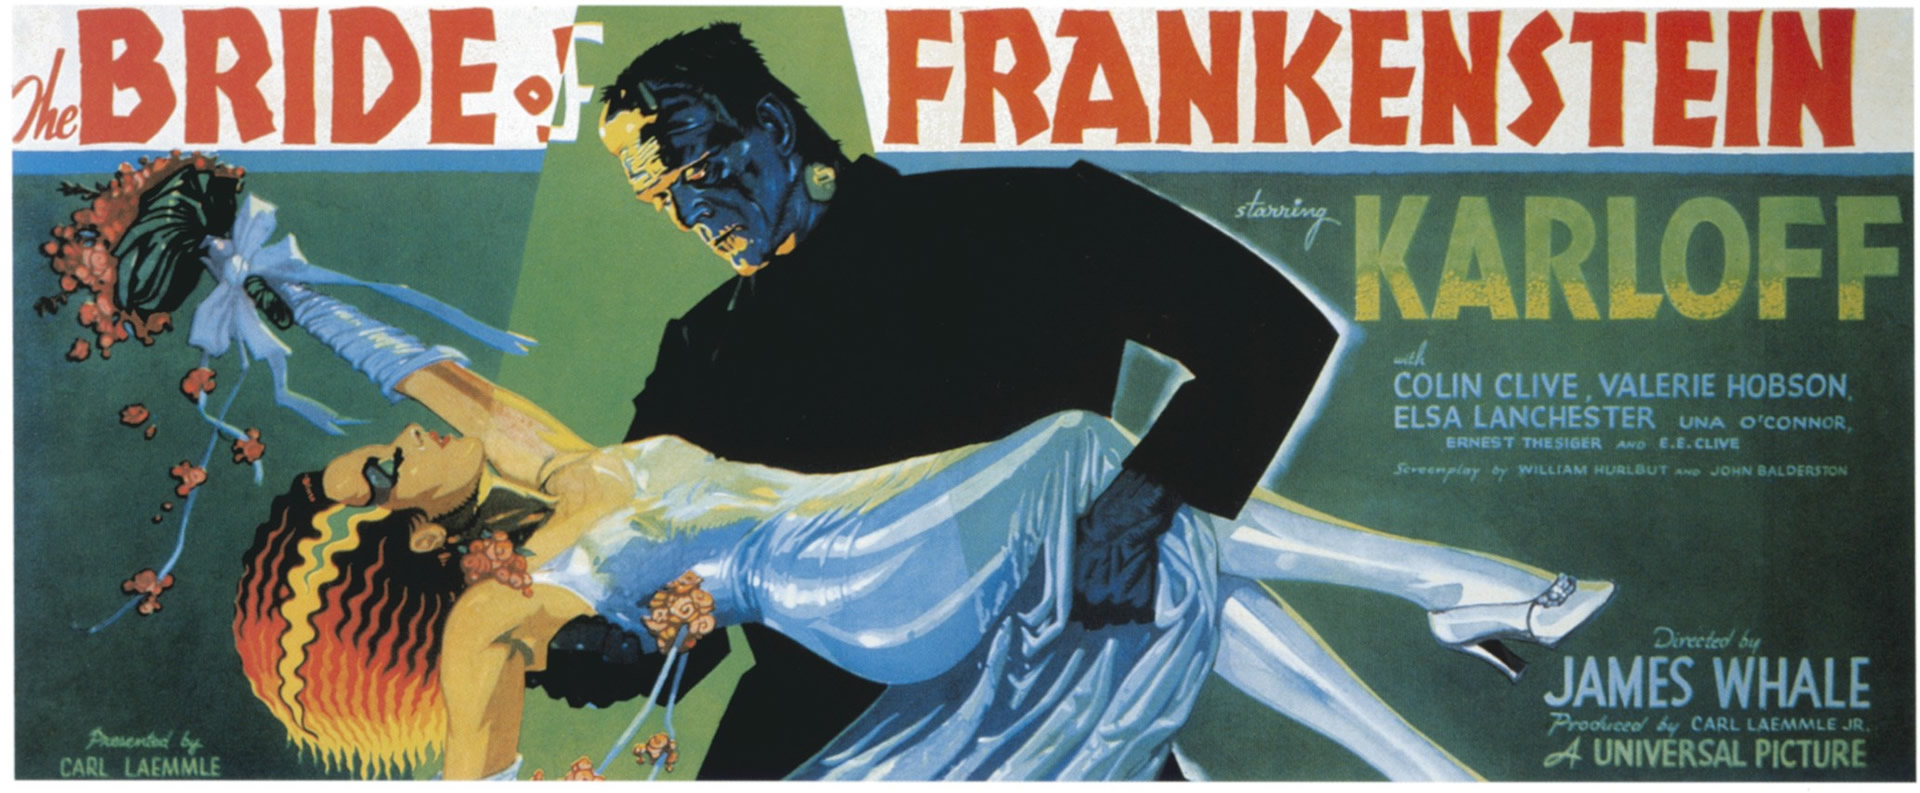 The Bride Of Frankenstein Landscape 1930s Movie Posters